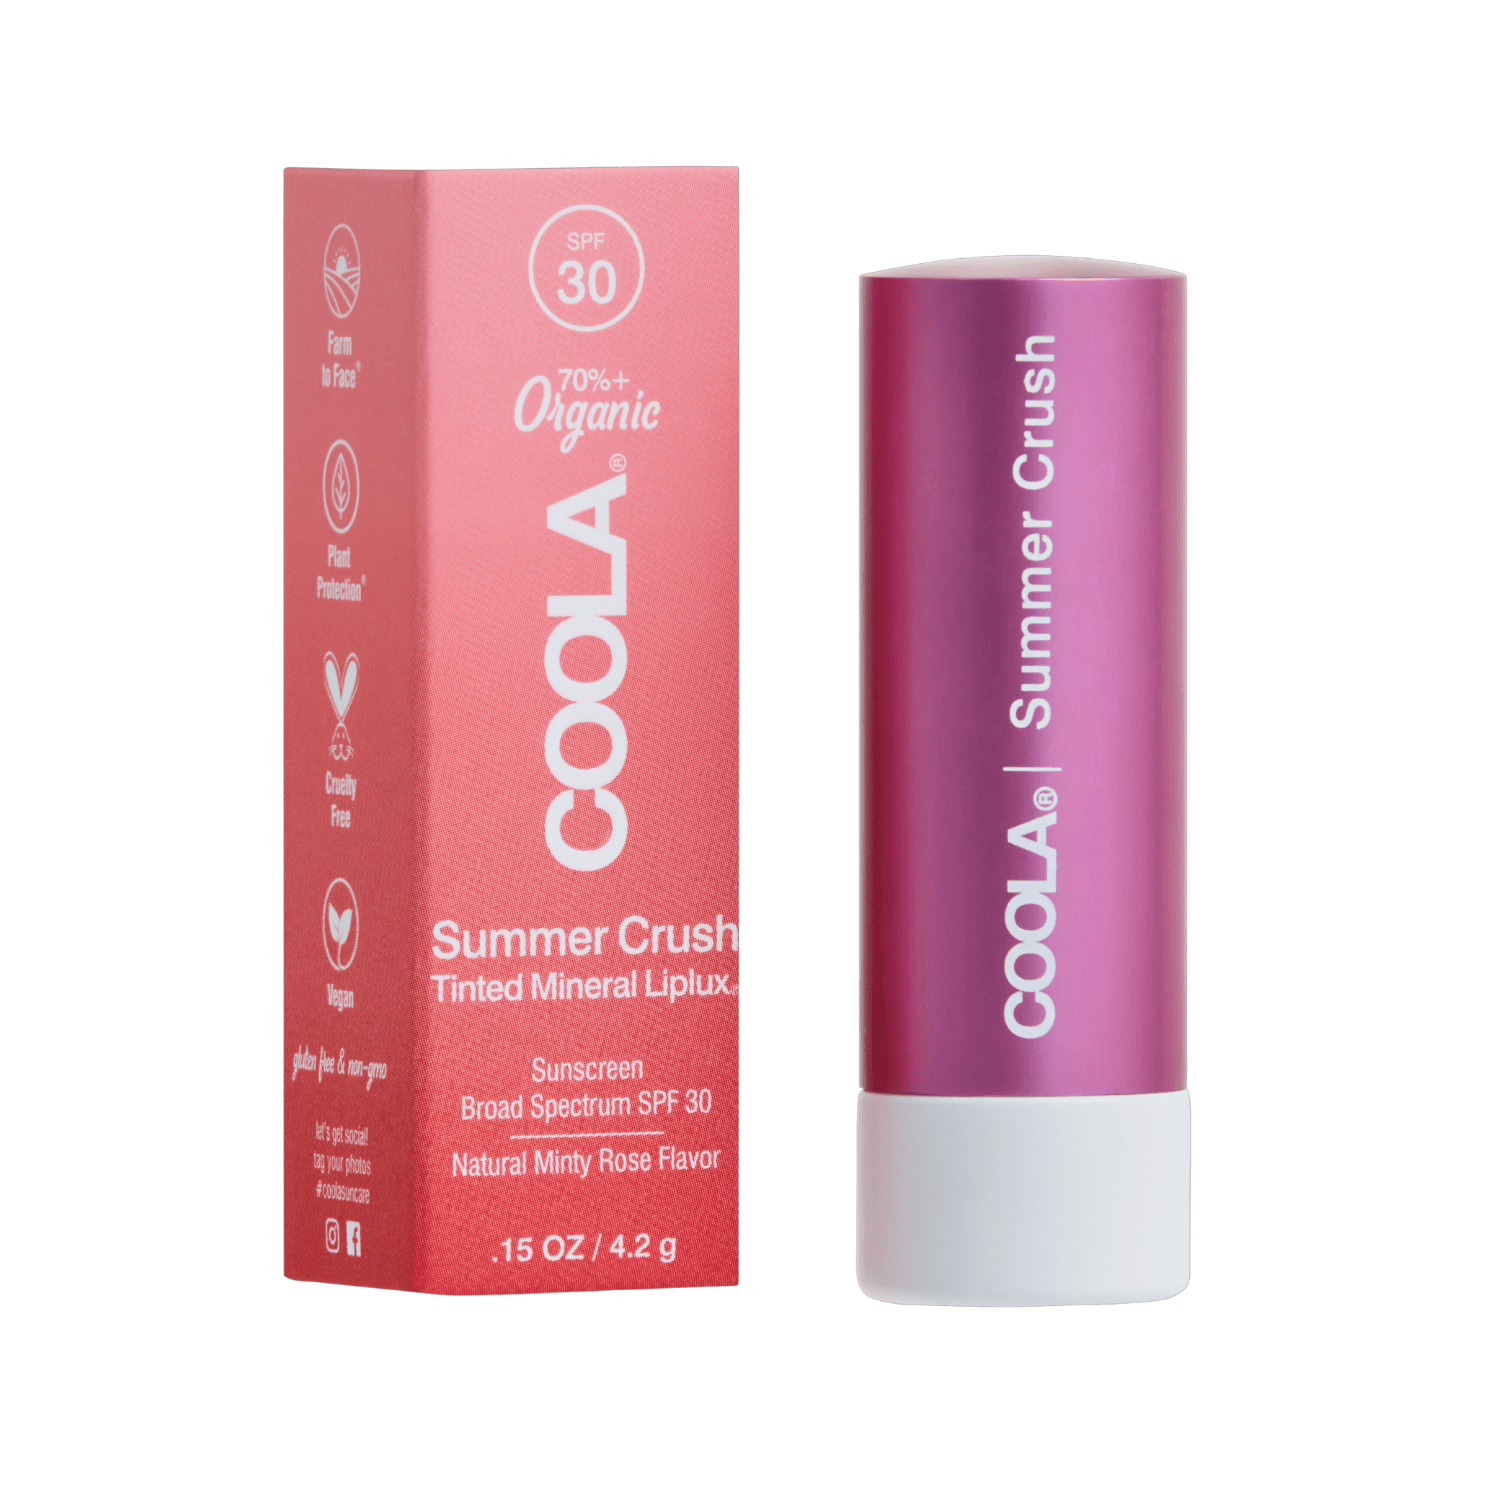 COOLA - Mineral Liplux Organic Tinted Lip Balm Sunscreen SPF30 Summer Crush